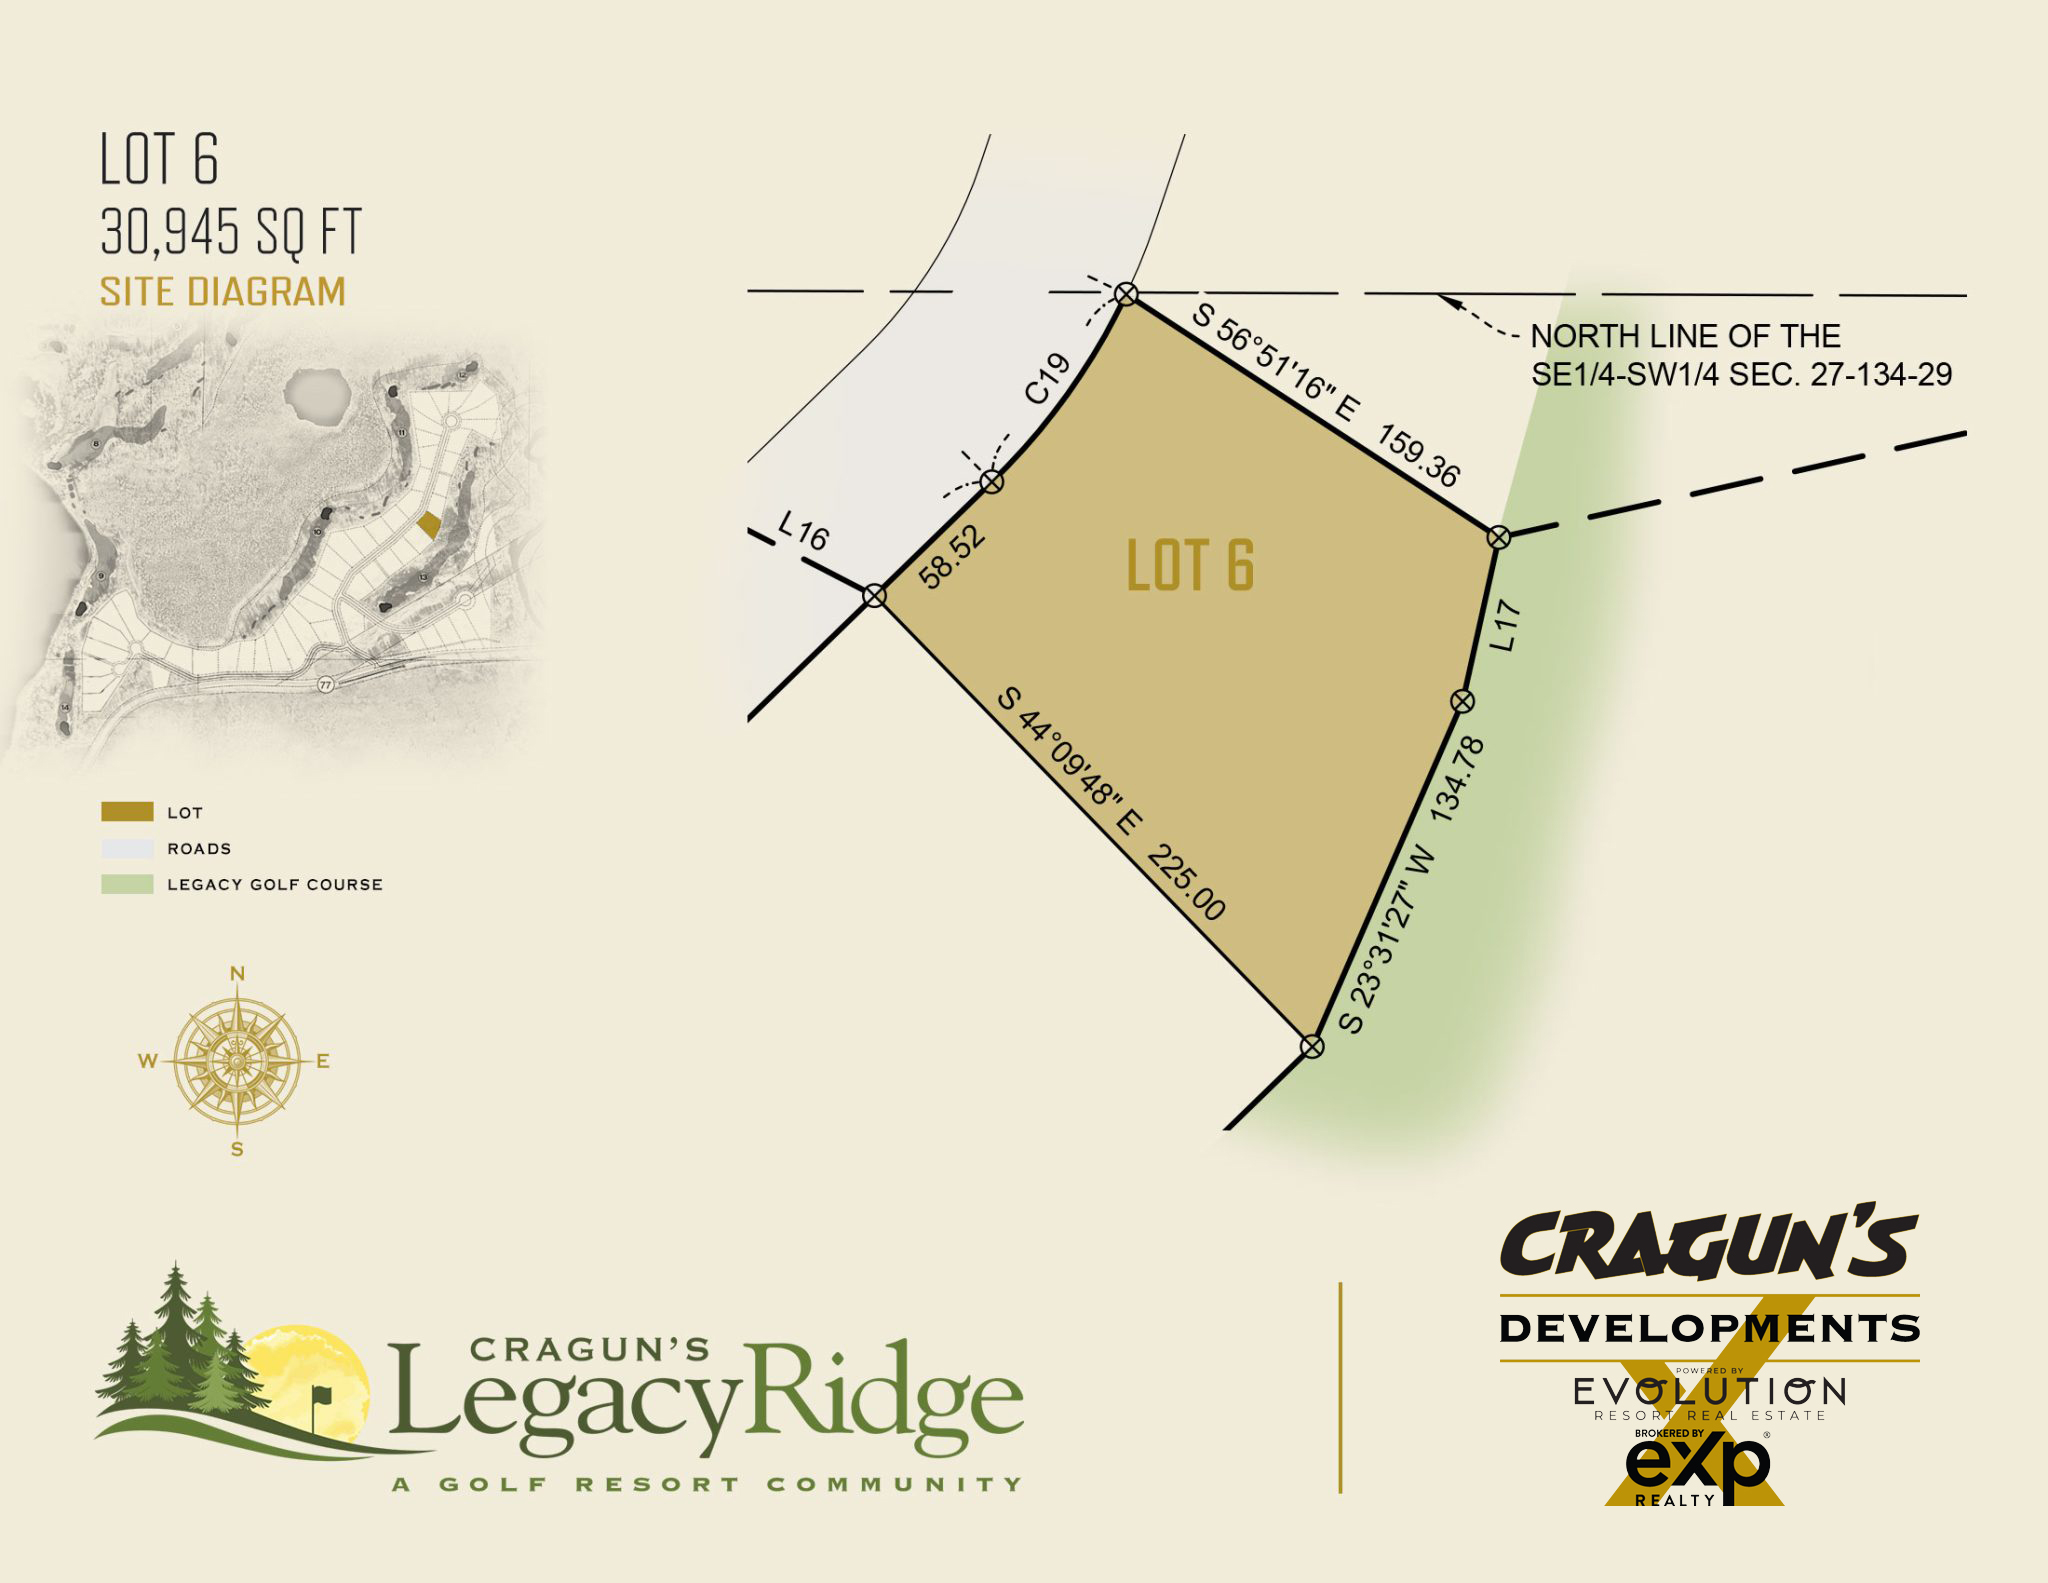 Legacy Ridge Lot 6 at Cragun's Developments in Brainerd, MN